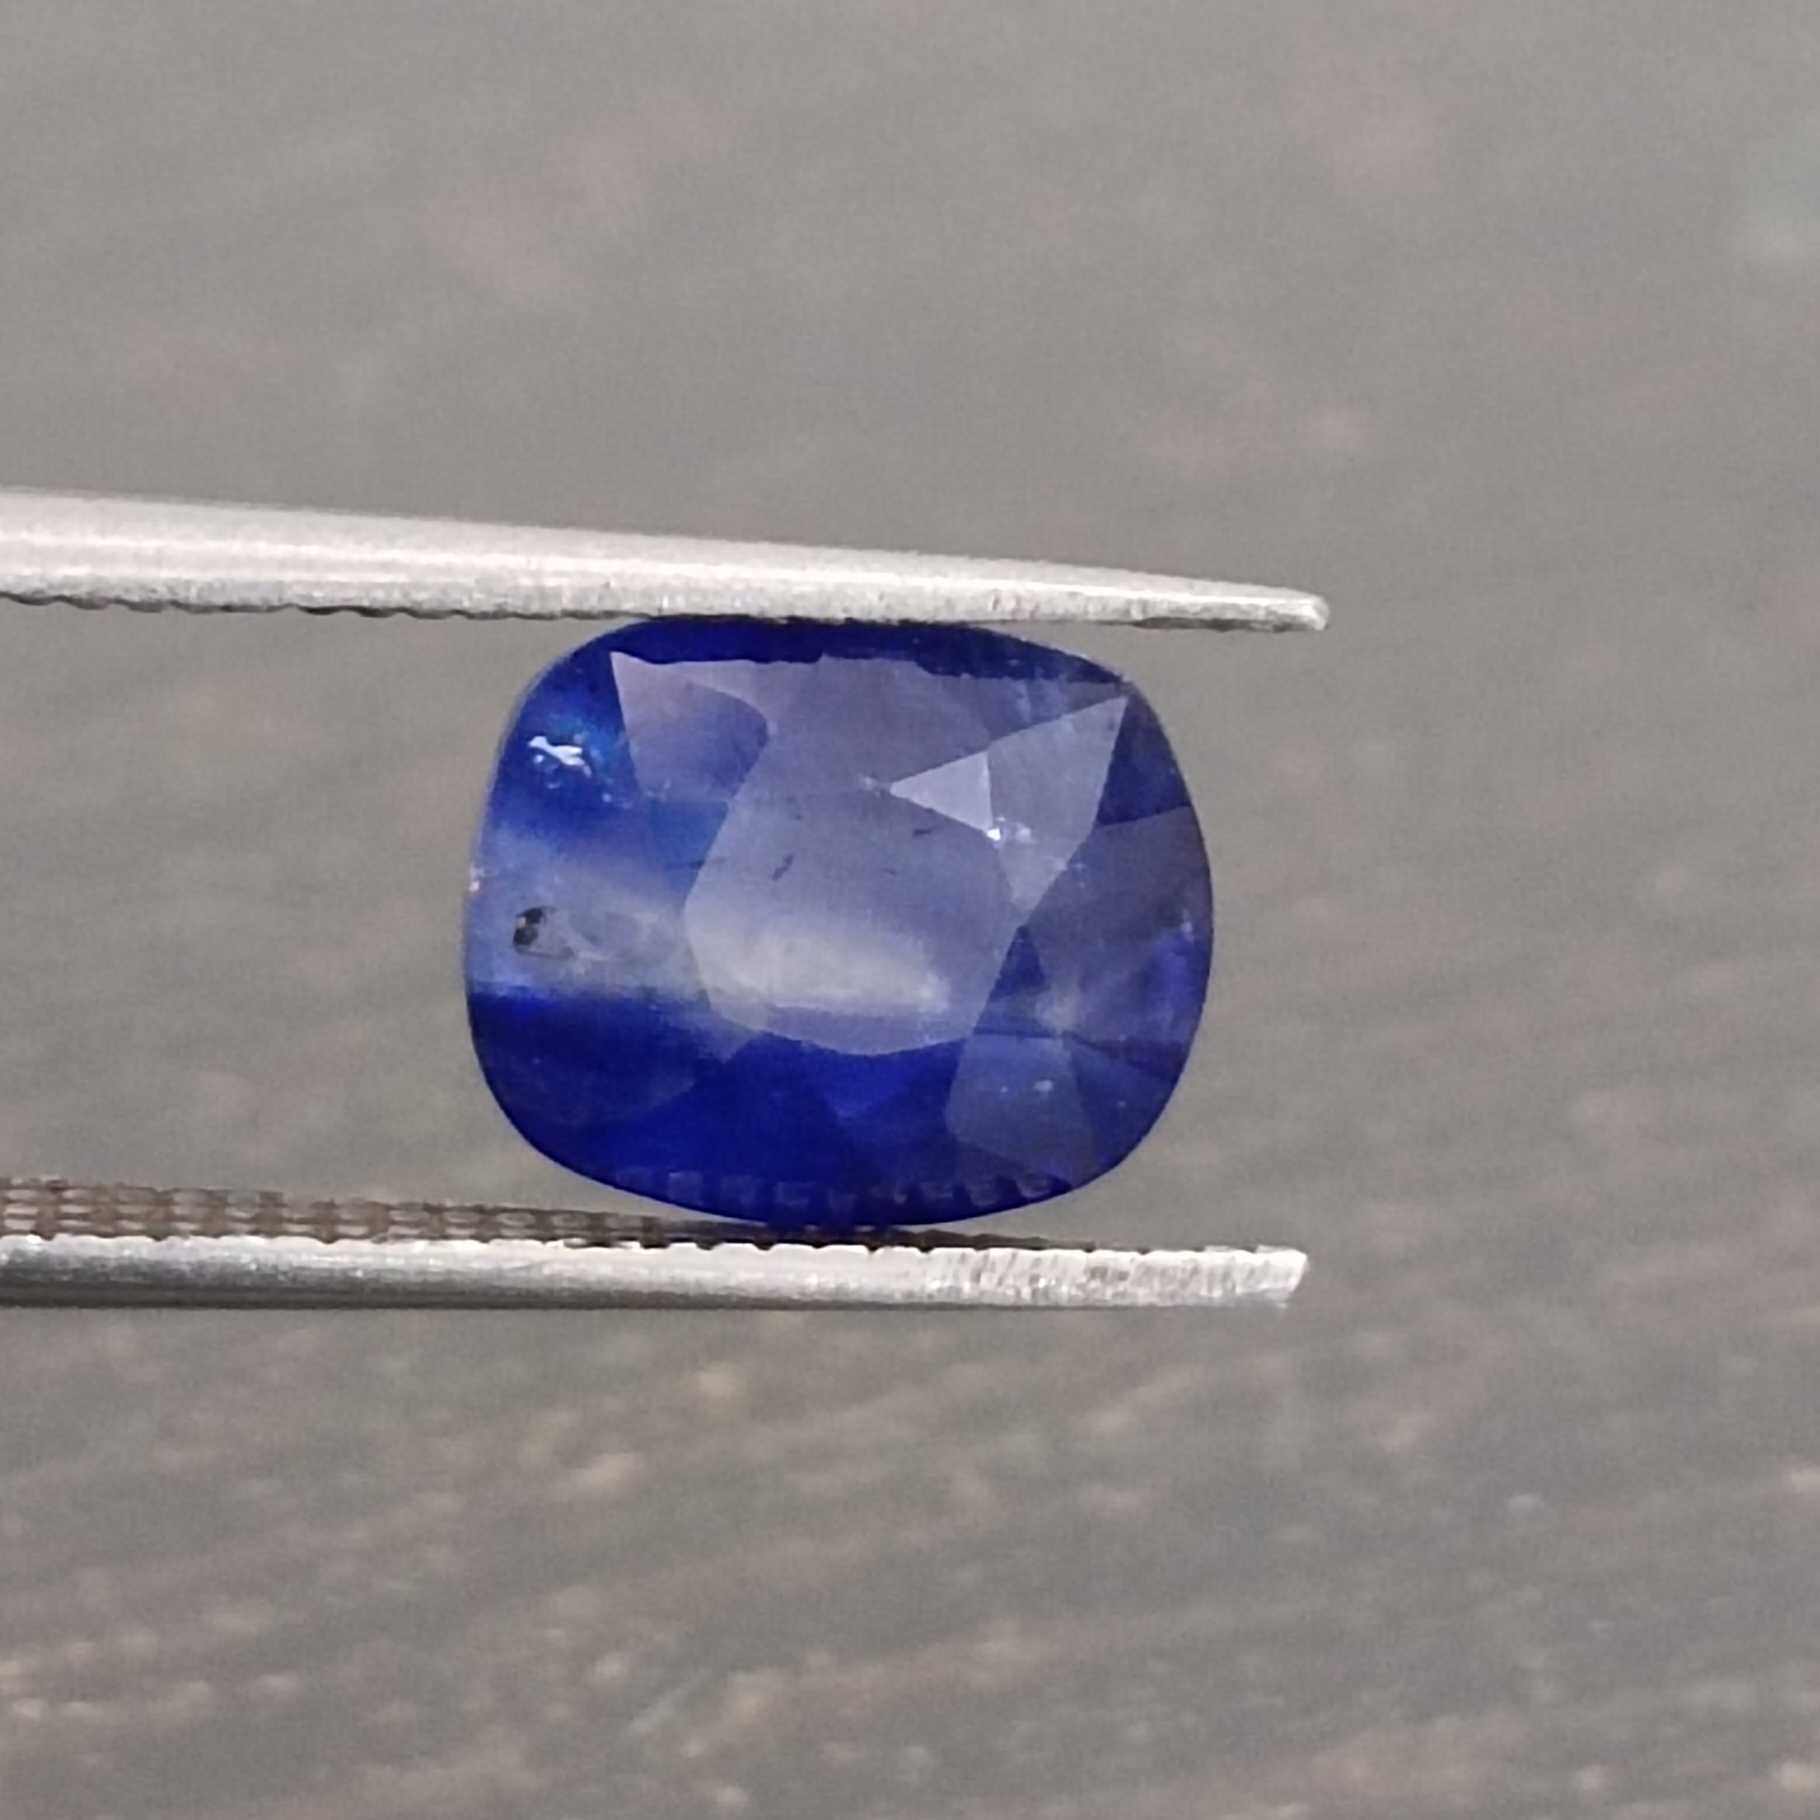 2.69ct IGI certified royal blue cushion cut sapphire  gemstone /